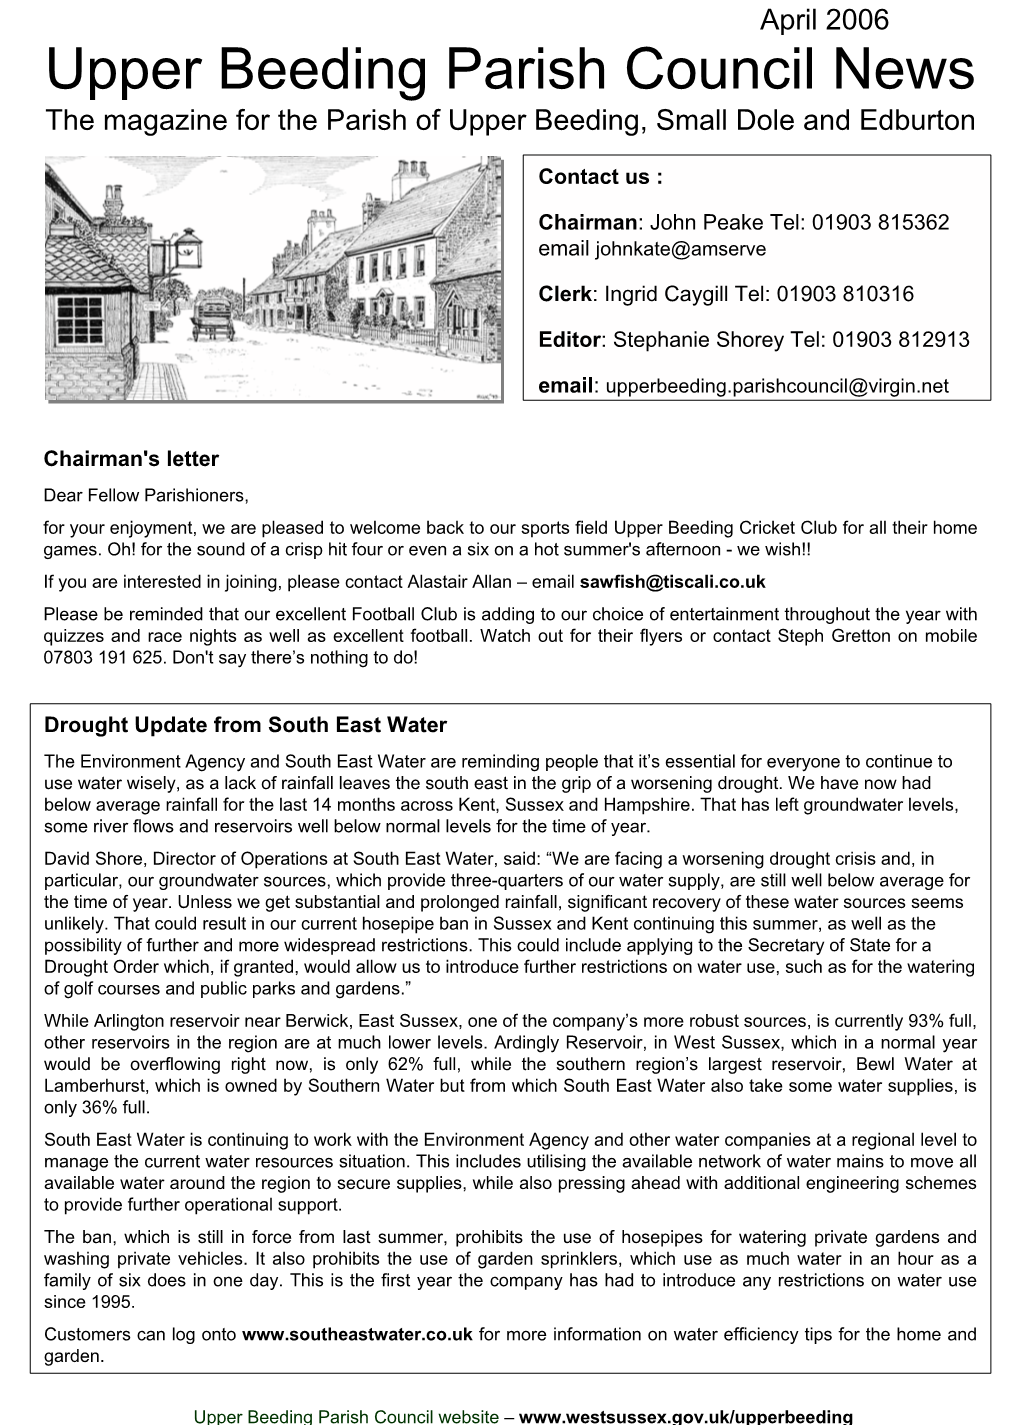 Upper Beeding Parish Council News the Magazine for the Parish of Upper Beeding, Small Dole and Edburton